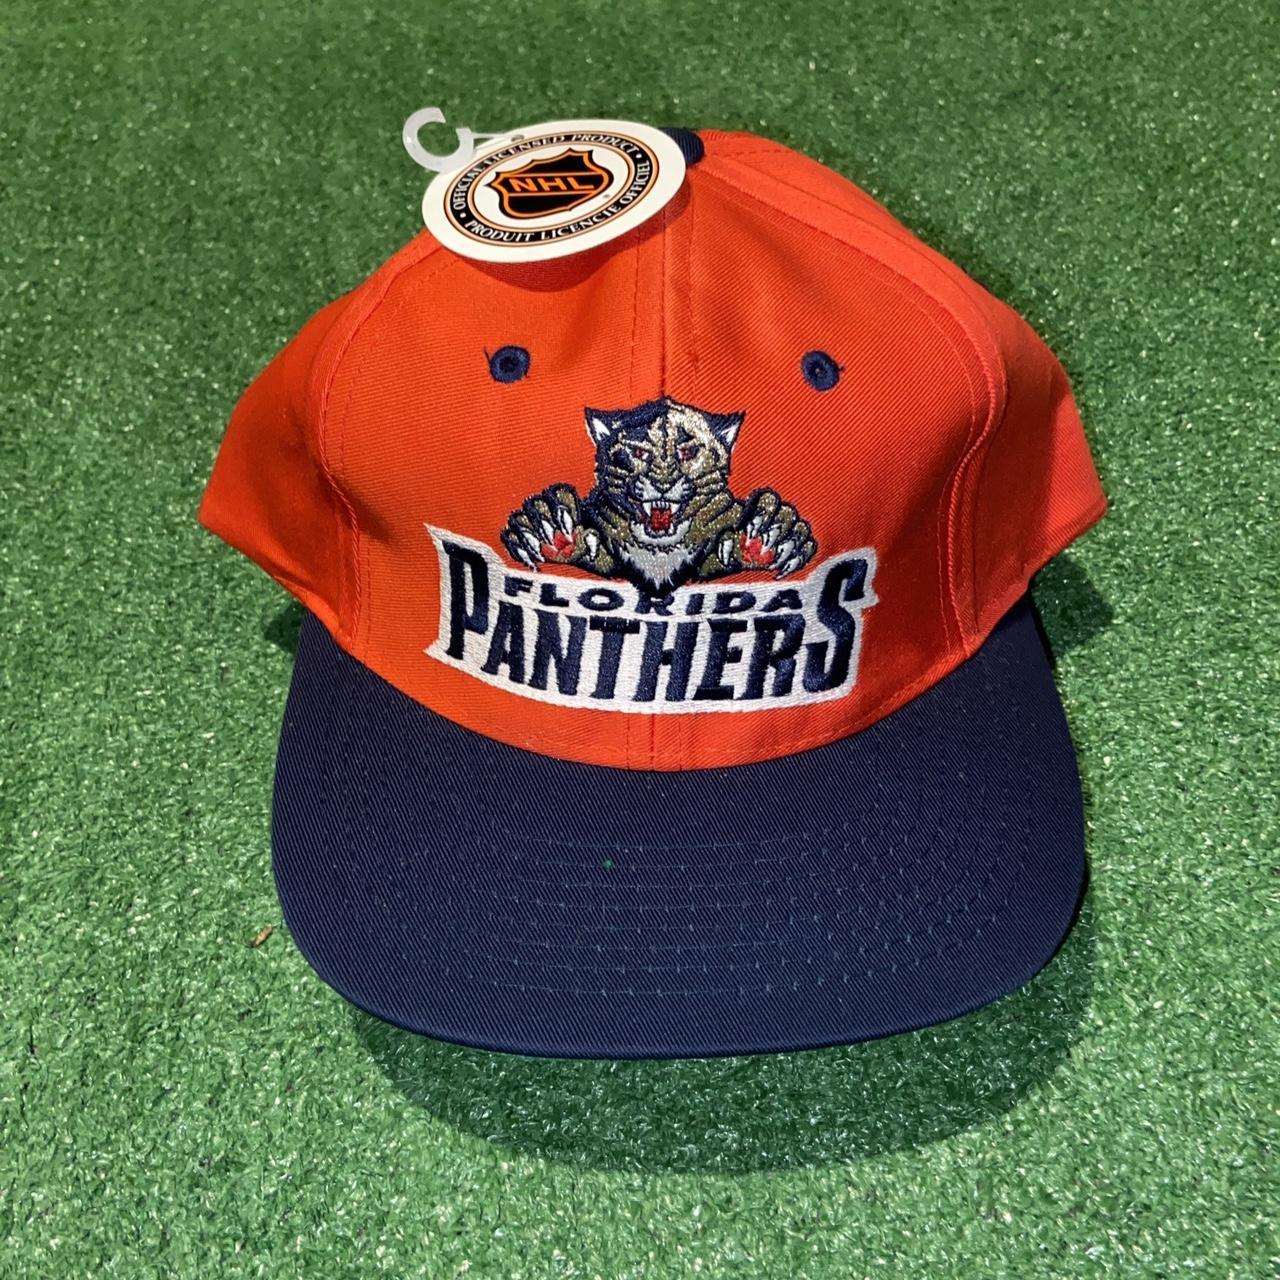 Vintage Florida Panthers Cap